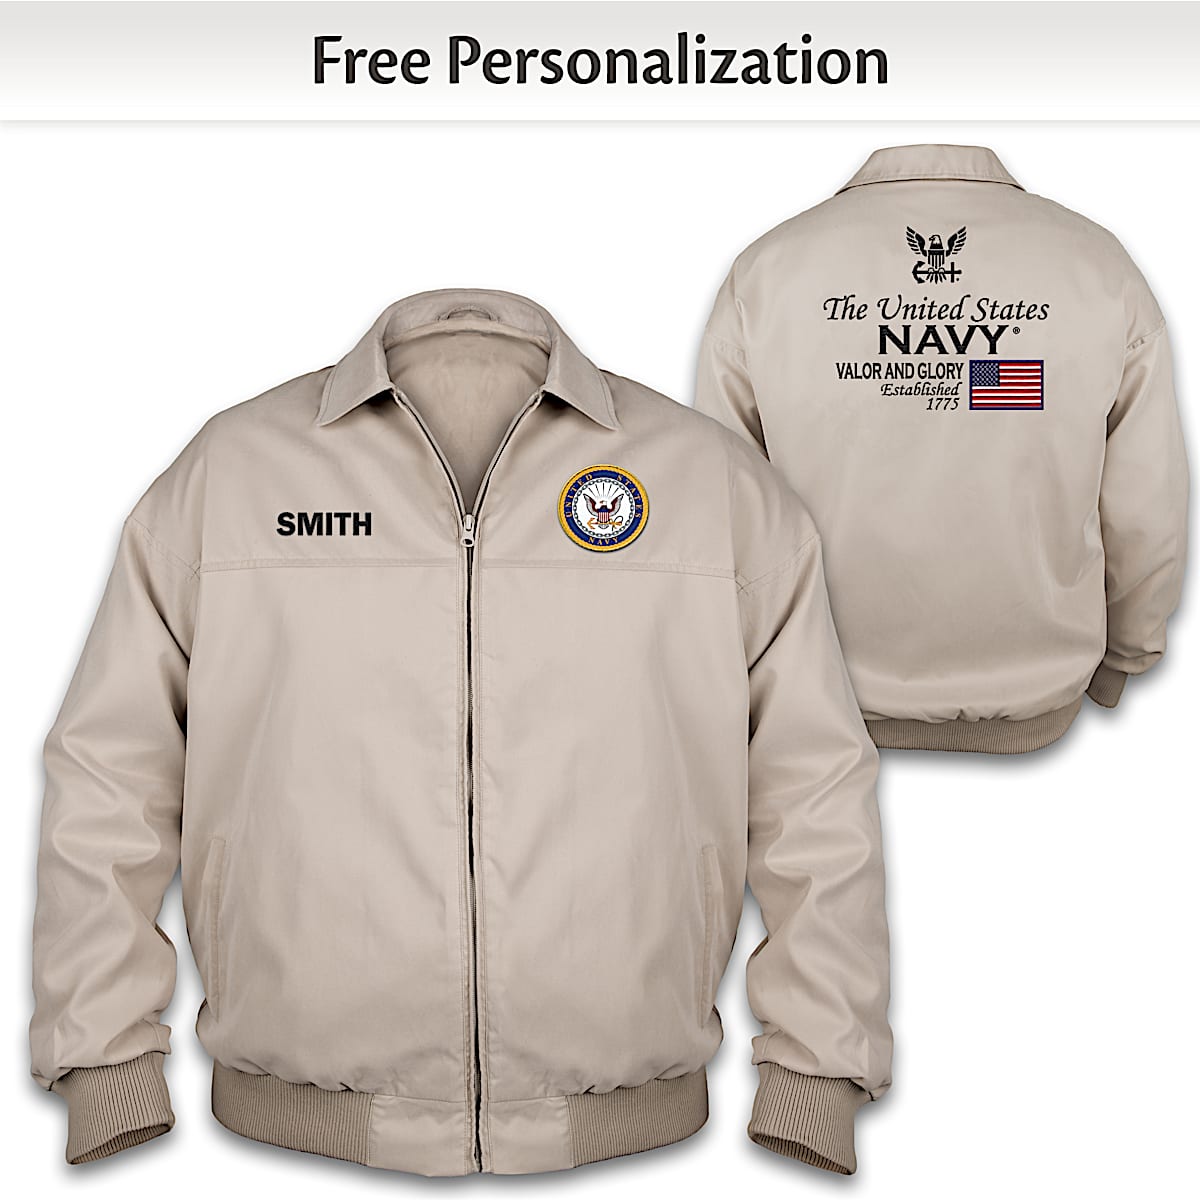 U.S. Navy Men's Windbreaker Jacket Personalized With Name